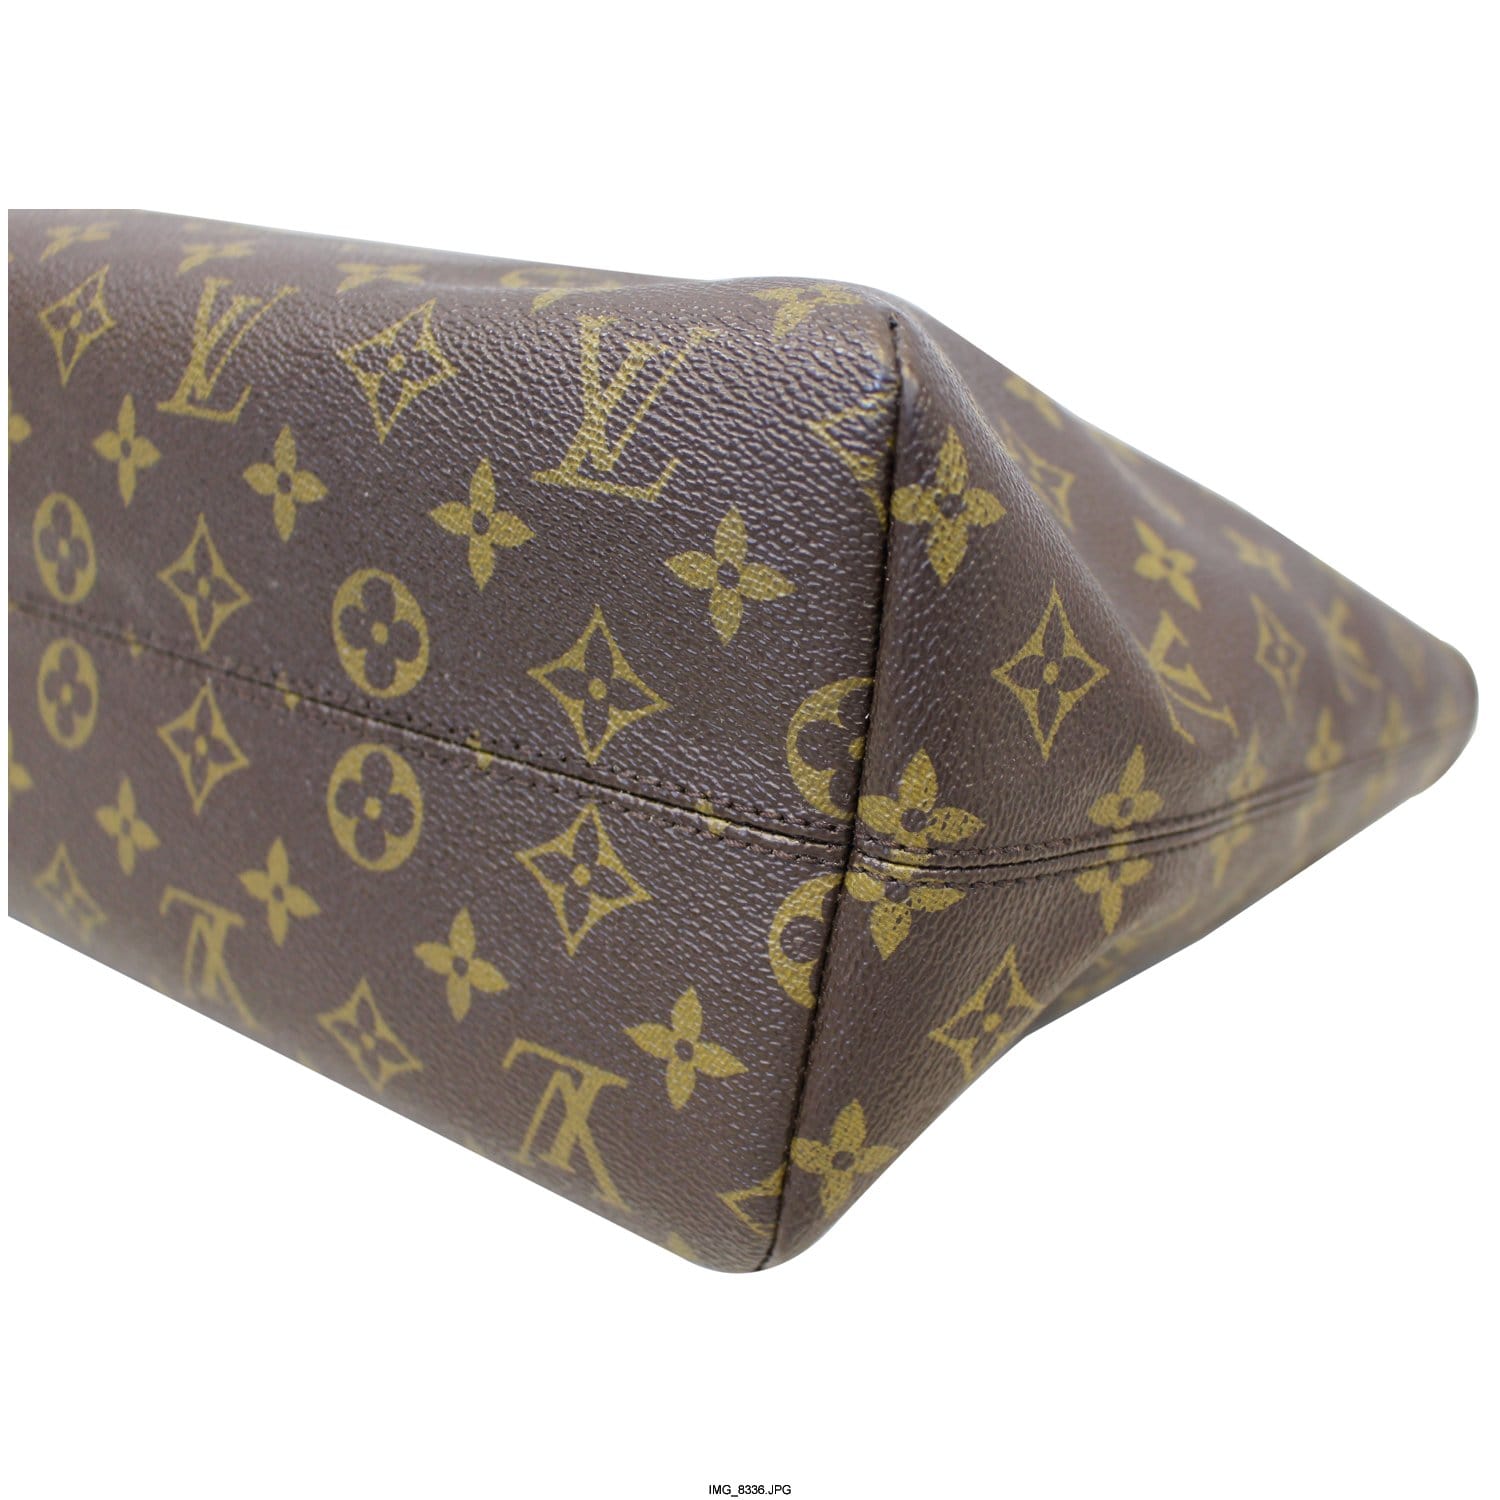 3ab0985] Auth Louis Vuitton Tote Bag Monogram Raspail PM M40608